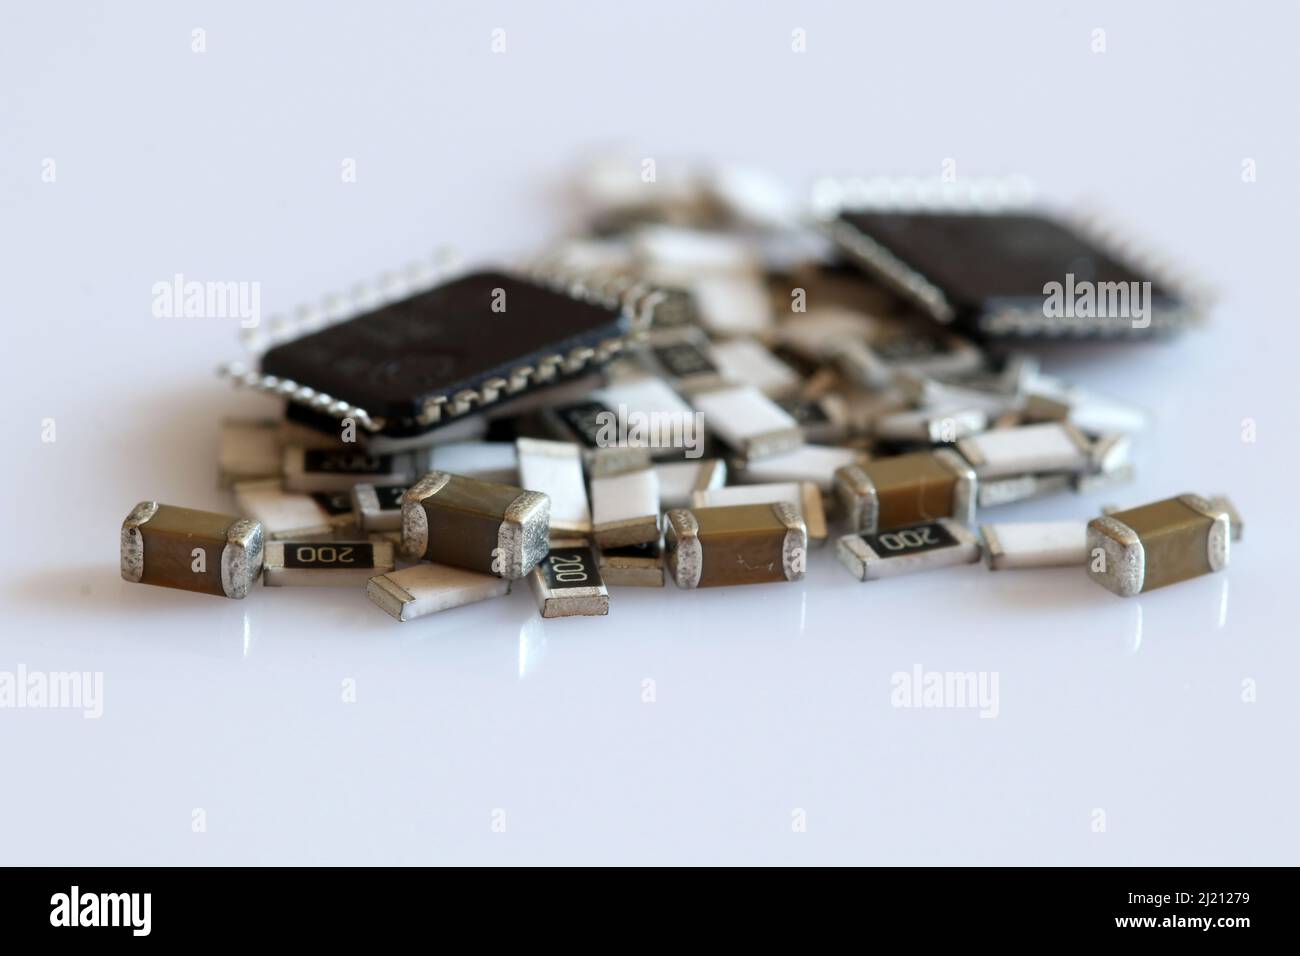 SMD electronic parts on white background. Stock Photo